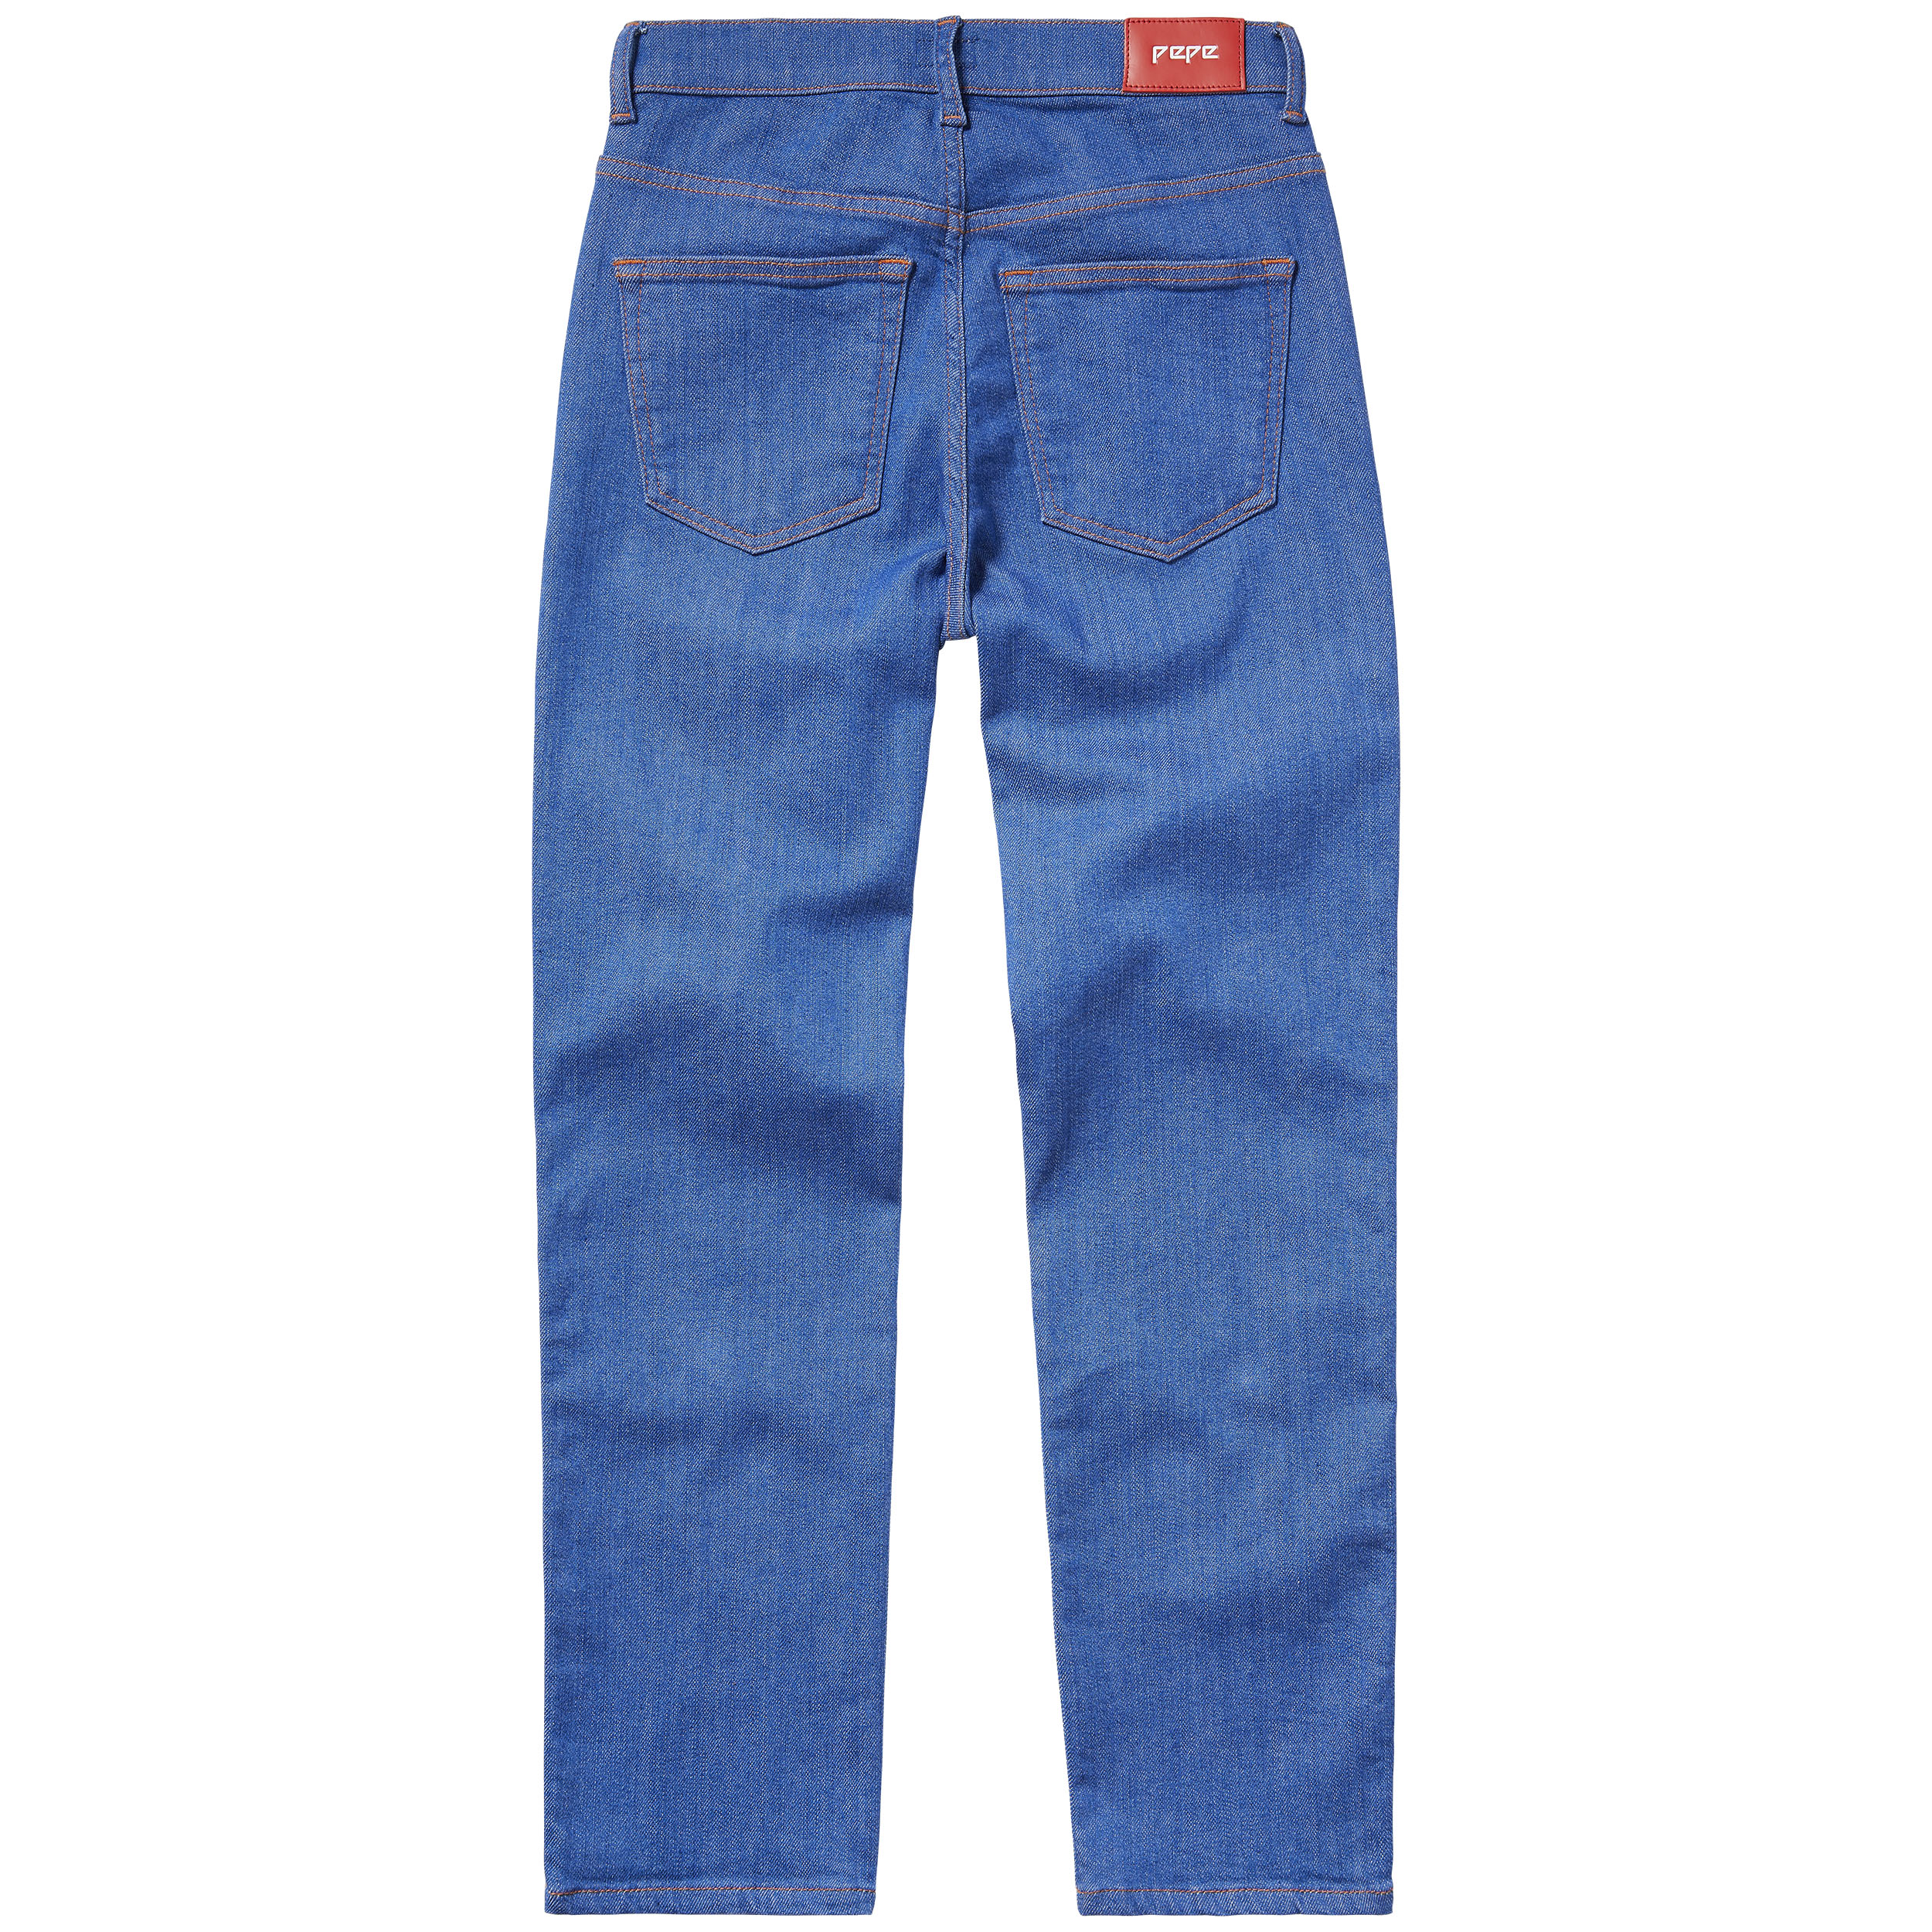 097.PL203166 джинсы betties blue pepe jeans 